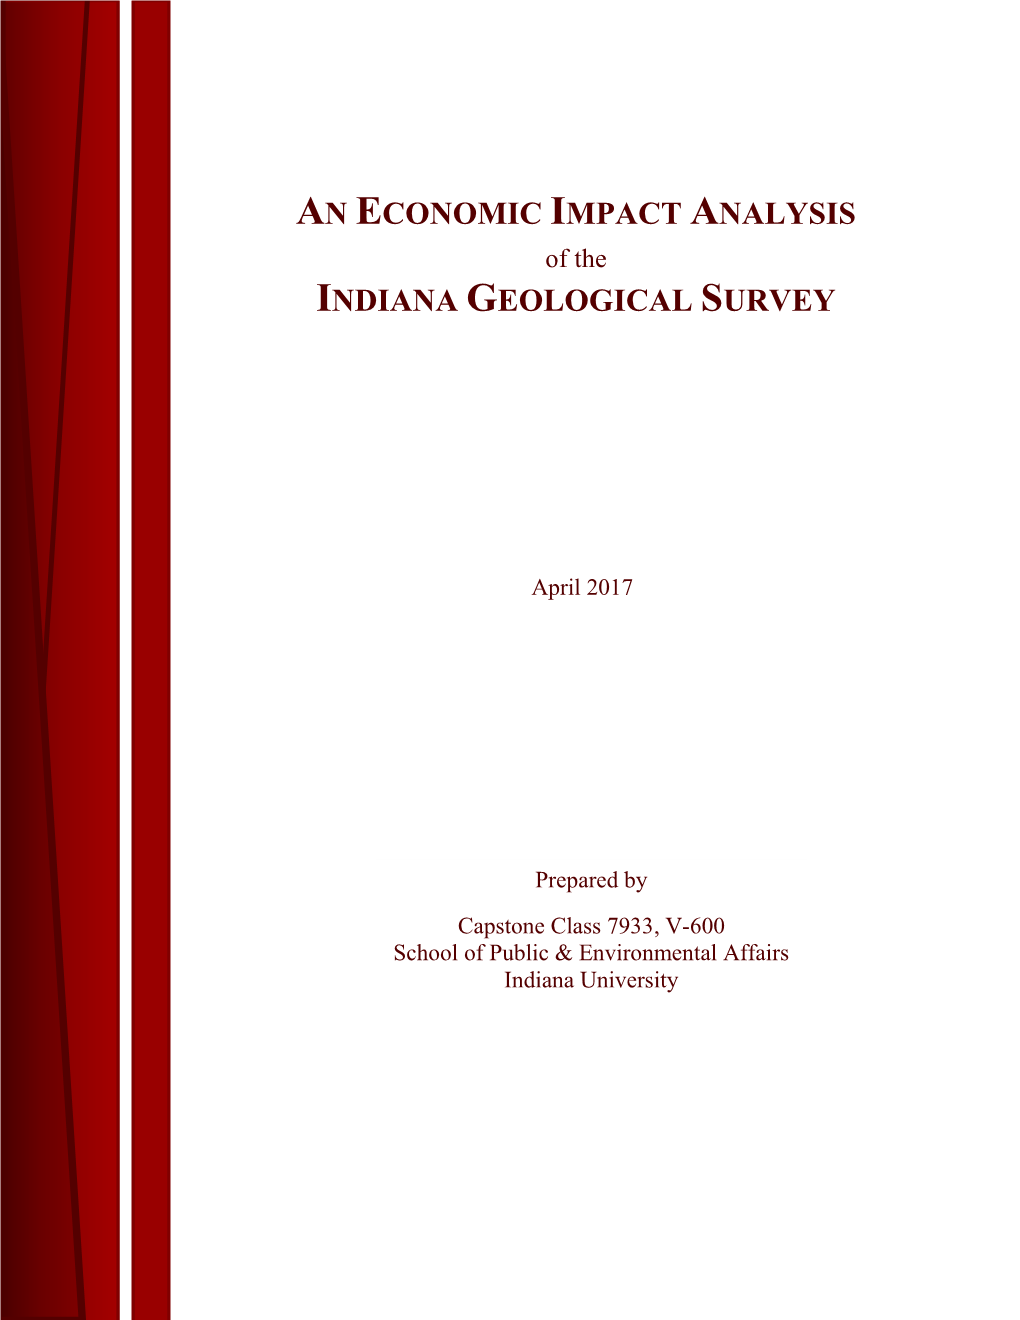 IGS Economic Impact Analysis